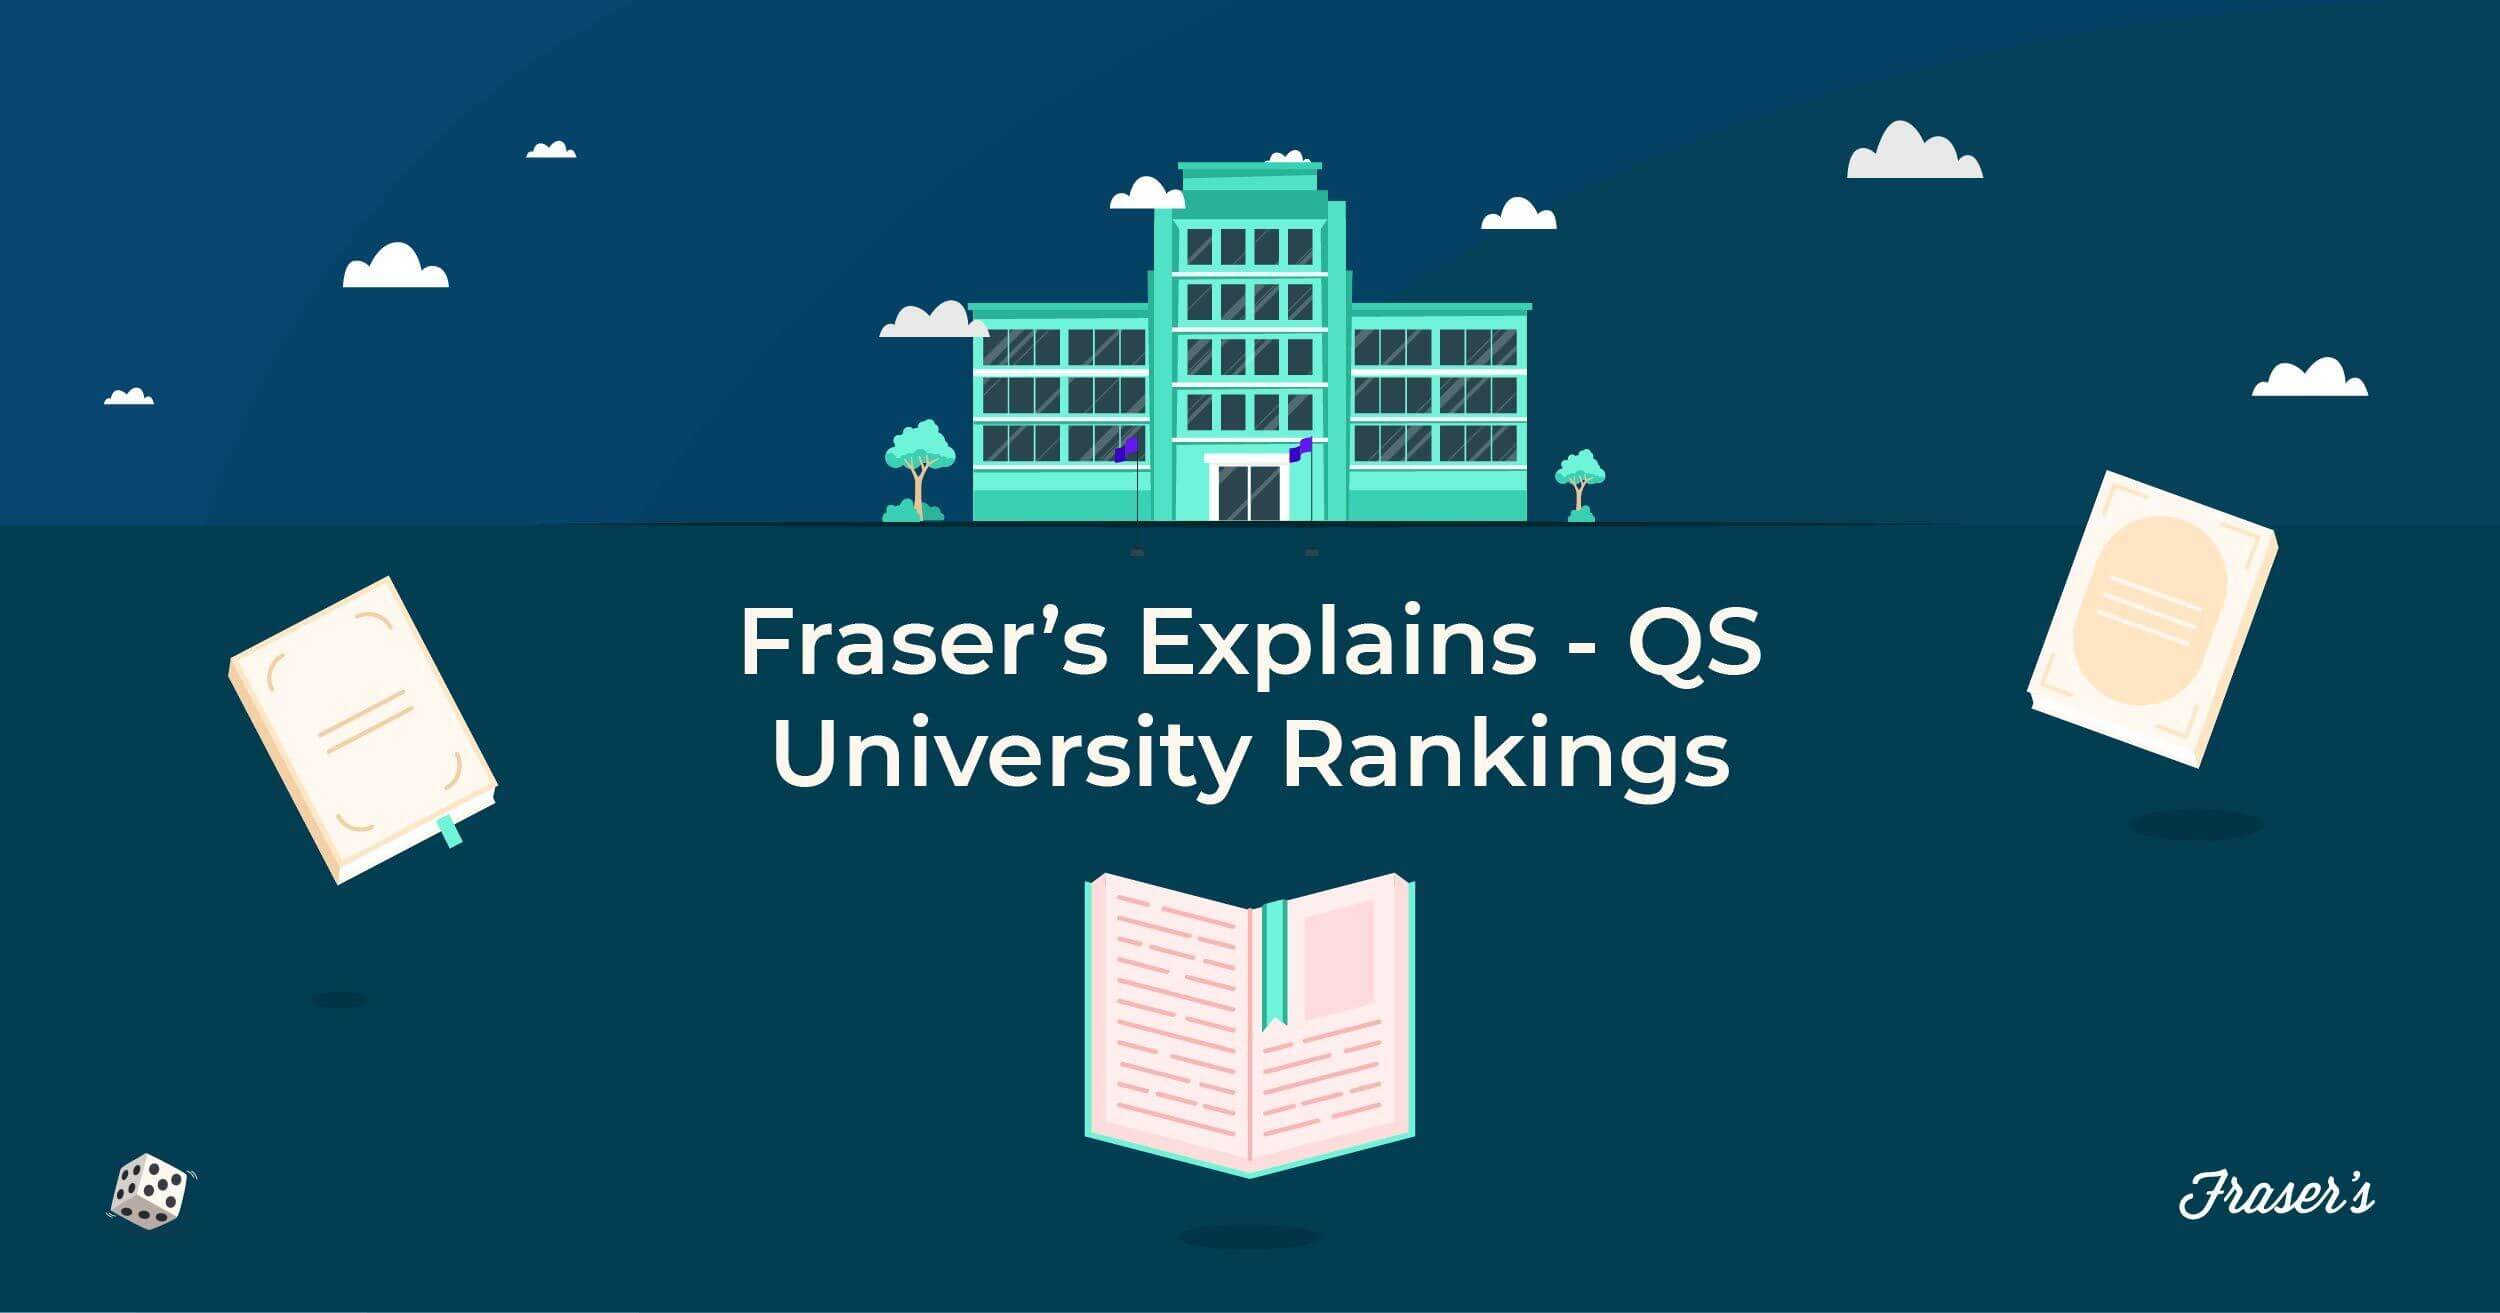 does university ranking matter- qs world university rankings explained by fraser's medical